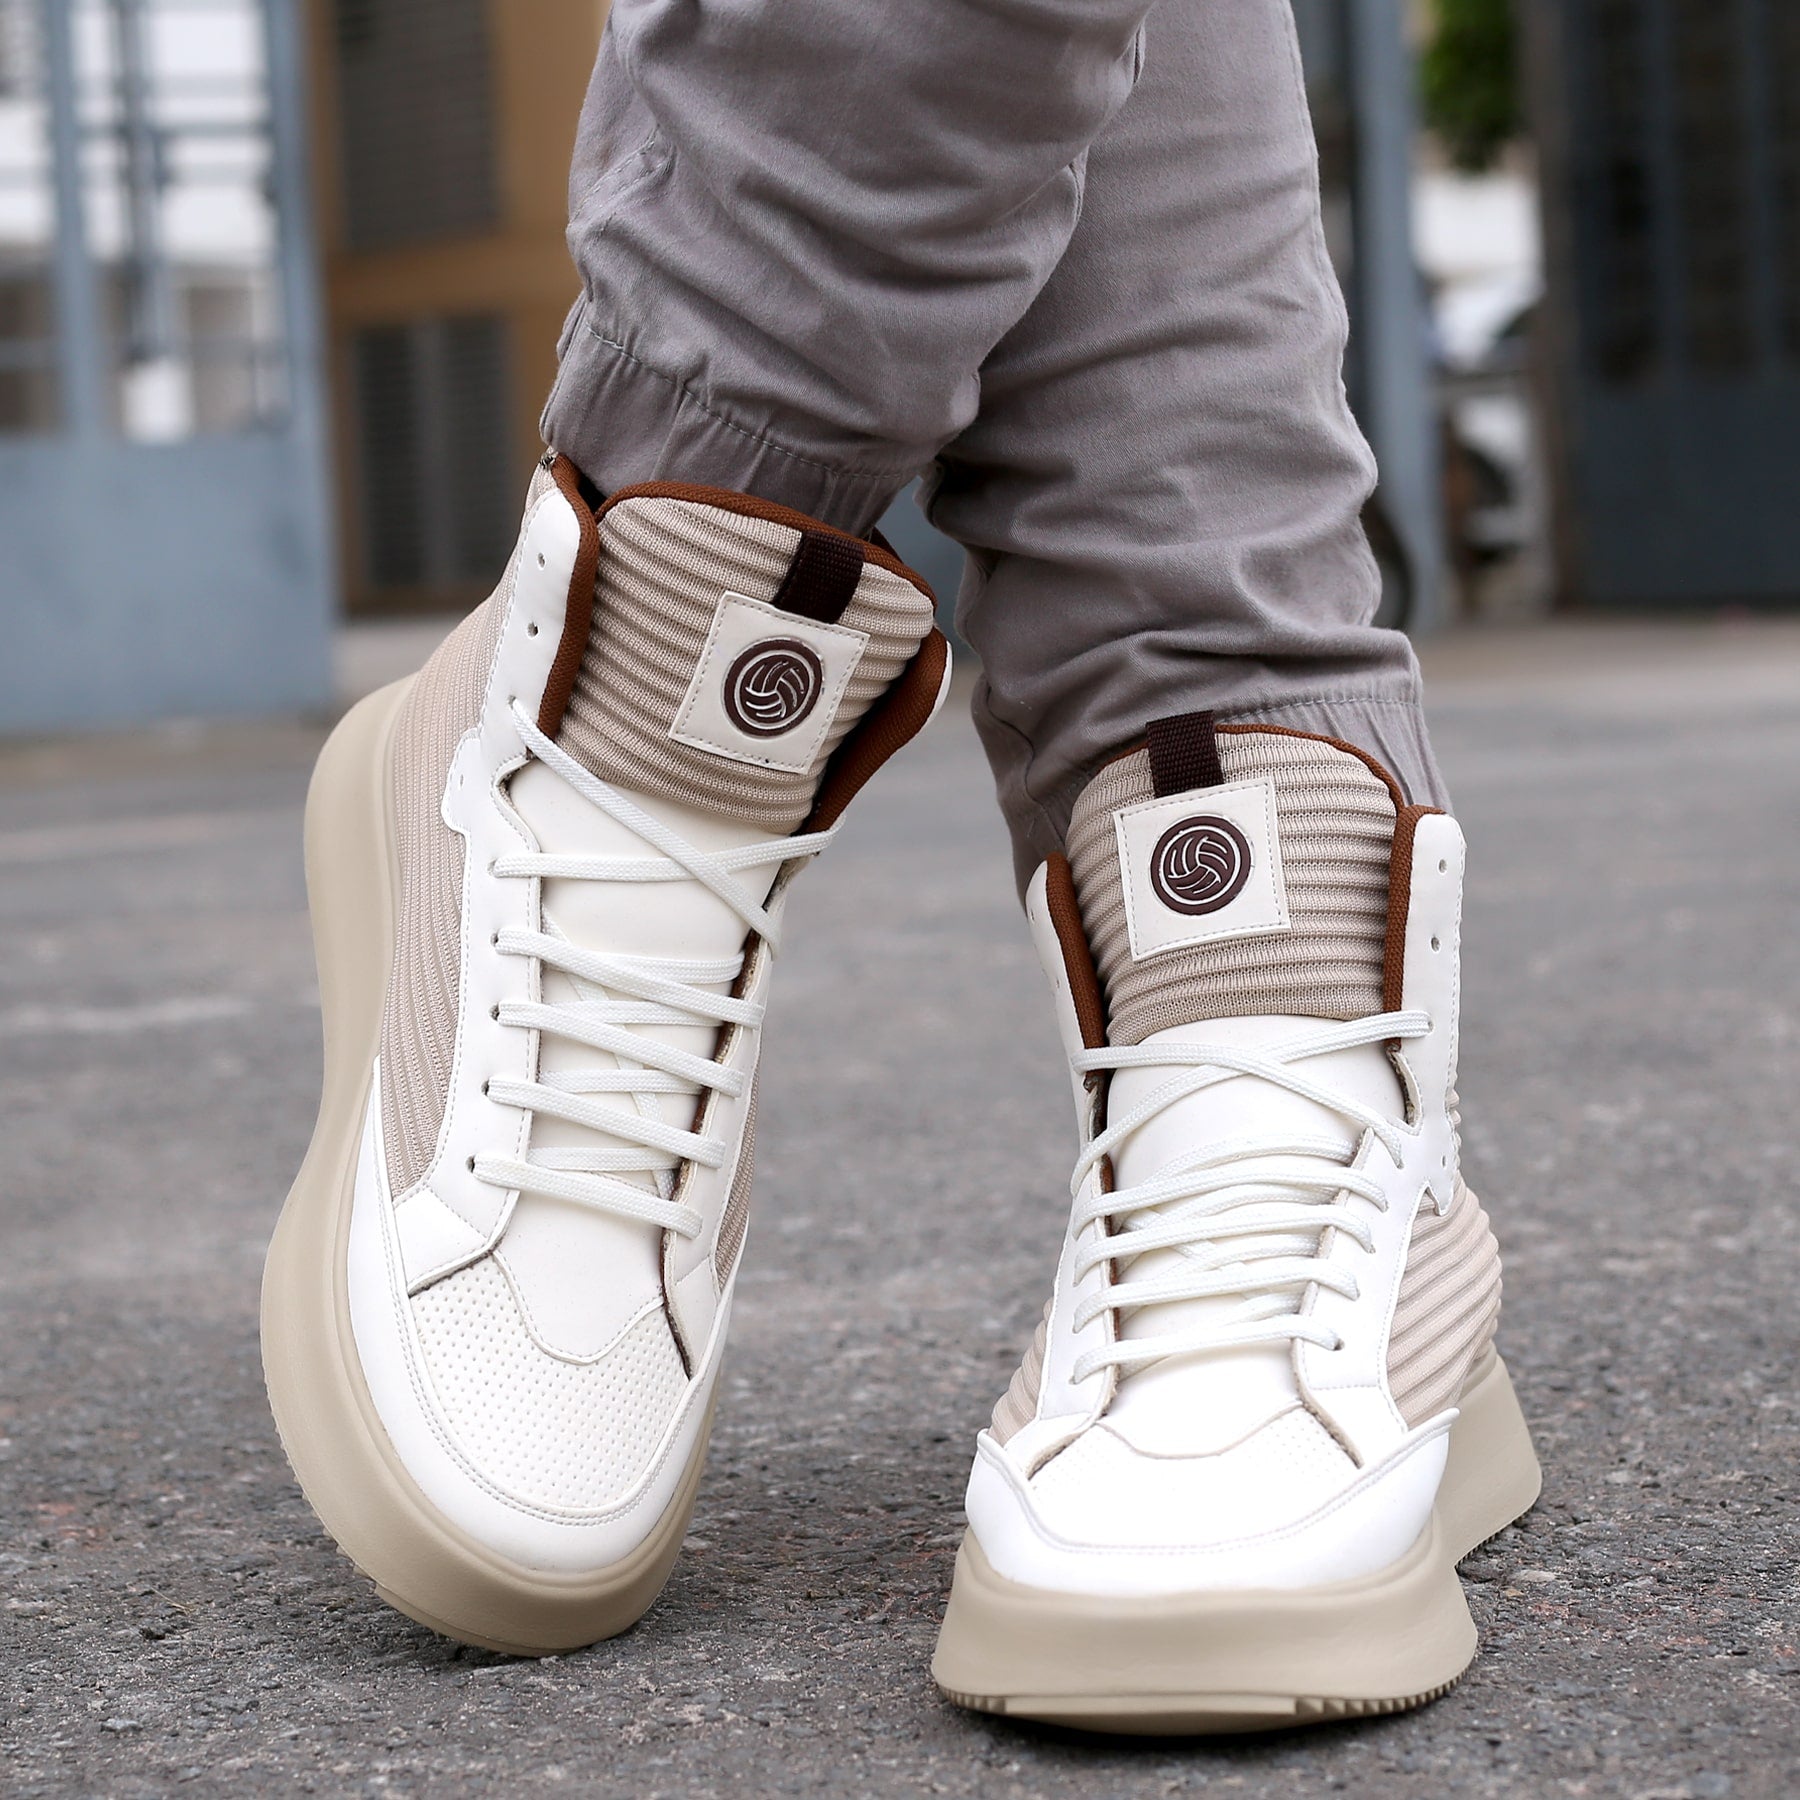 Bacca Bucci STREETHULK Hi-Top Street Fashion Chunky Sneakers